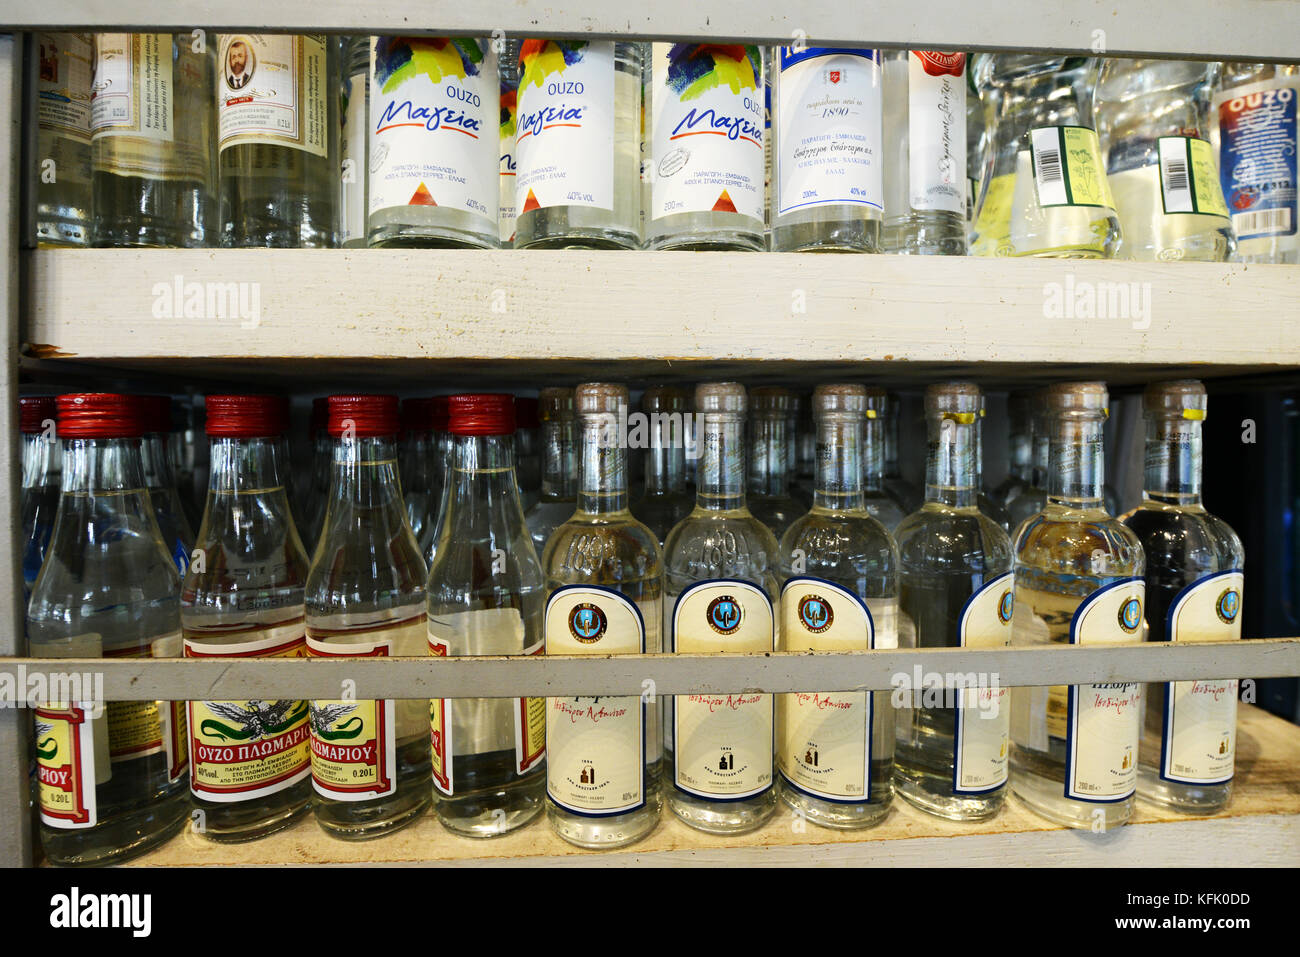 Ouzo bottles in 'The Greek' restaurant / Tavern in Thessaloniki, Greece. Stock Photo